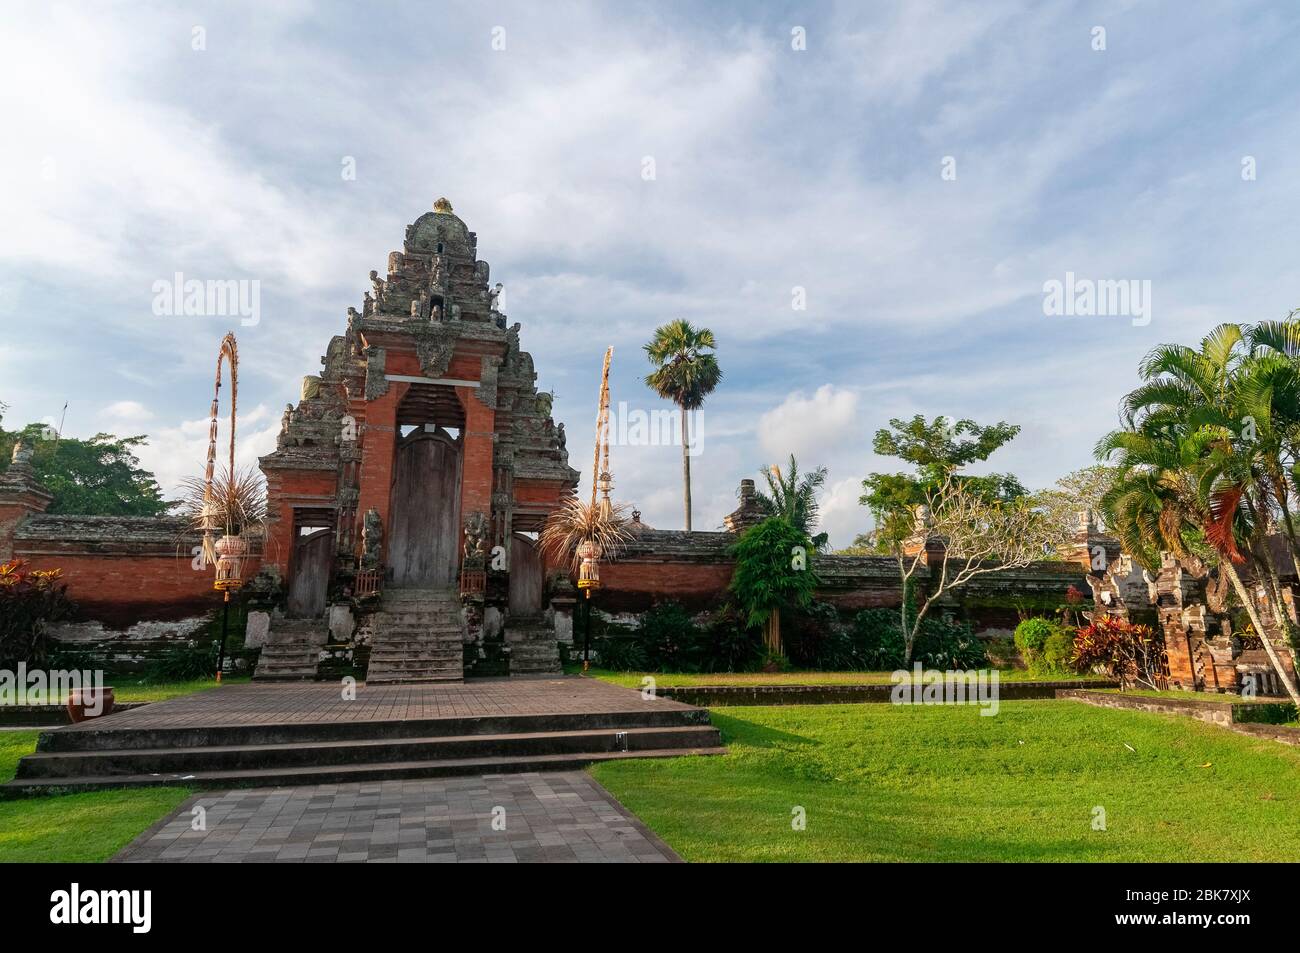 Entrance archway at Pura Taman Ayun Temple Bali Indonesia Stock Photo